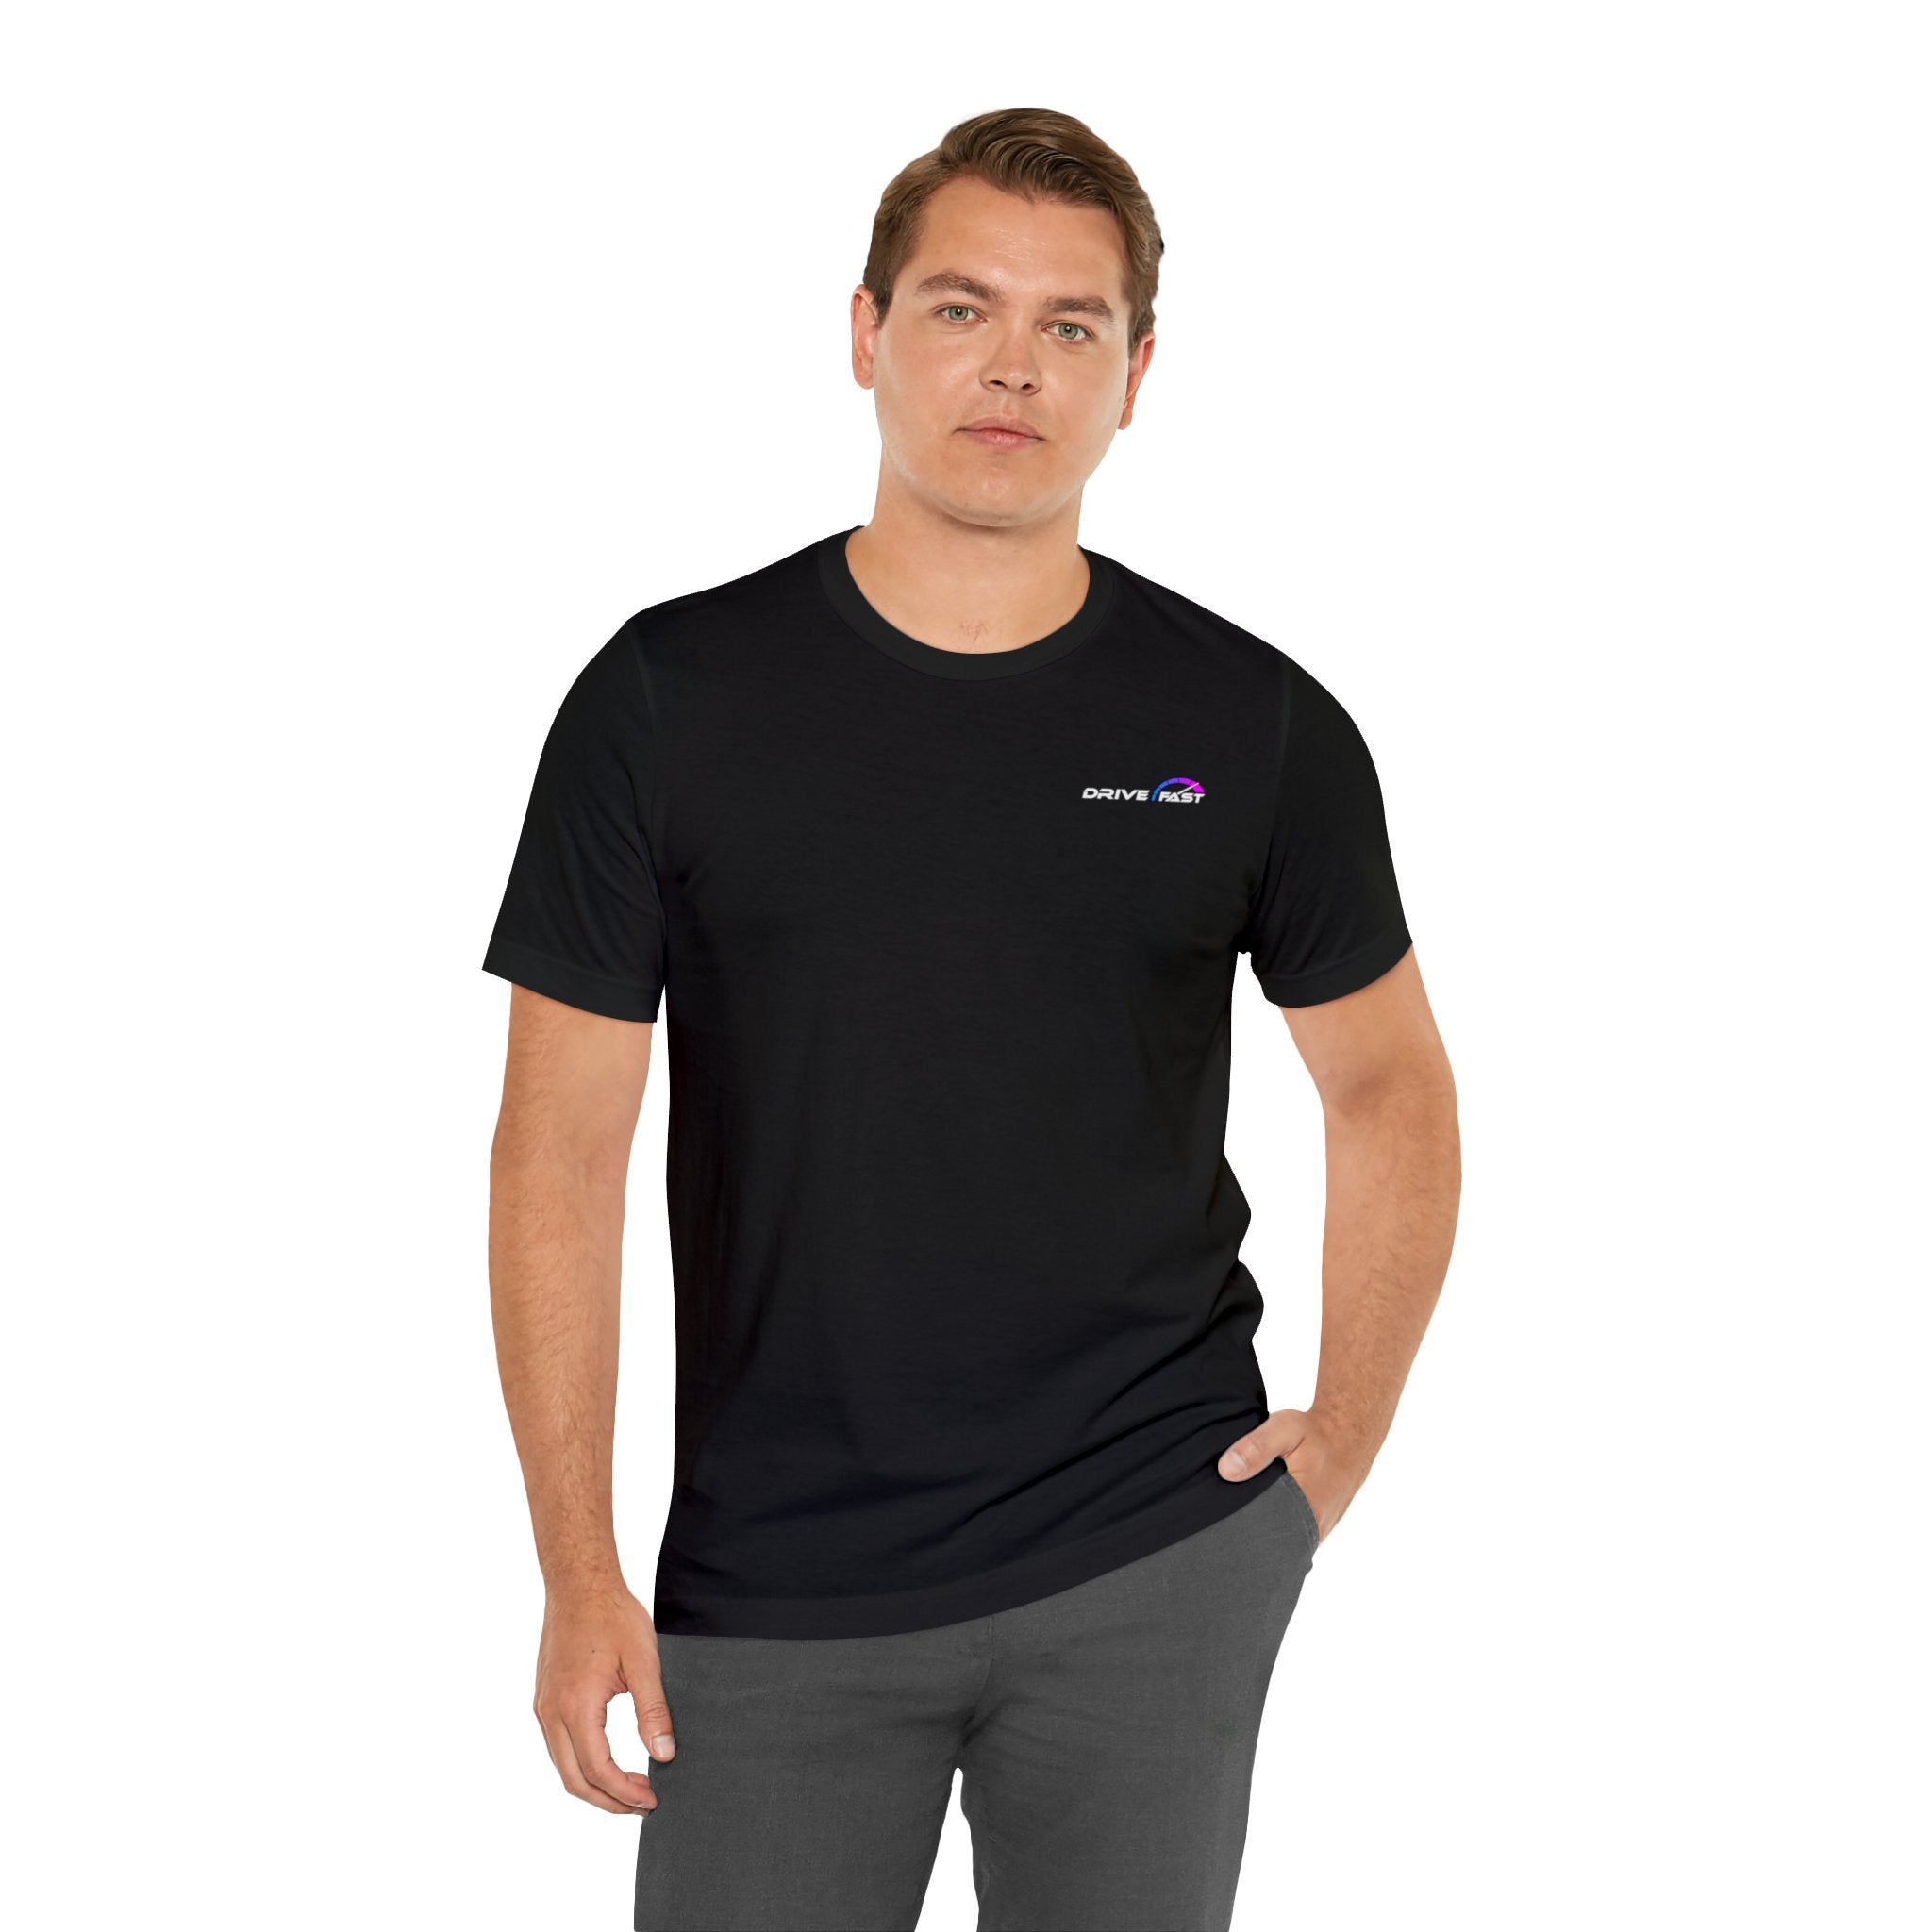 Matte Black BMW i8 T-Shirt